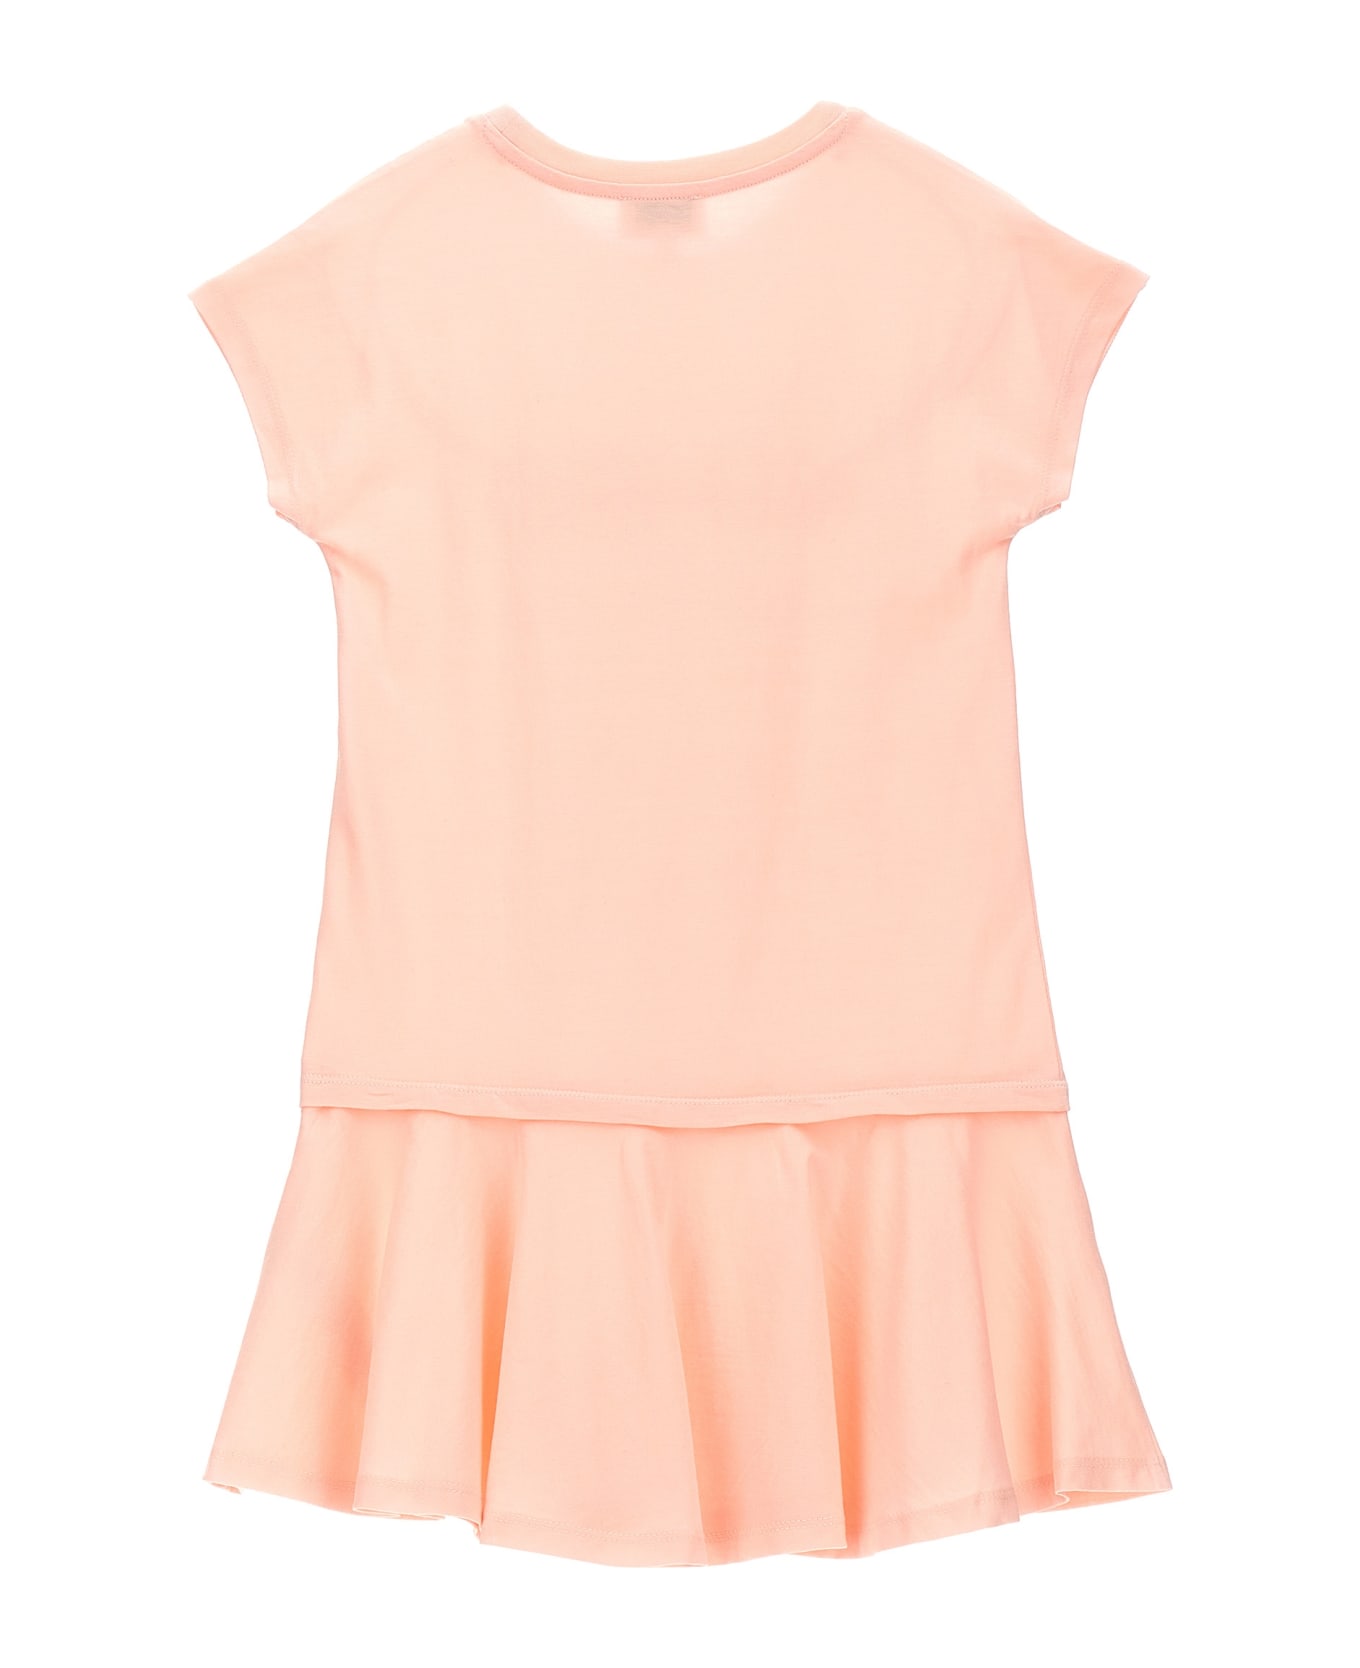 Kenzo Kids Logo Print Dress - Pink